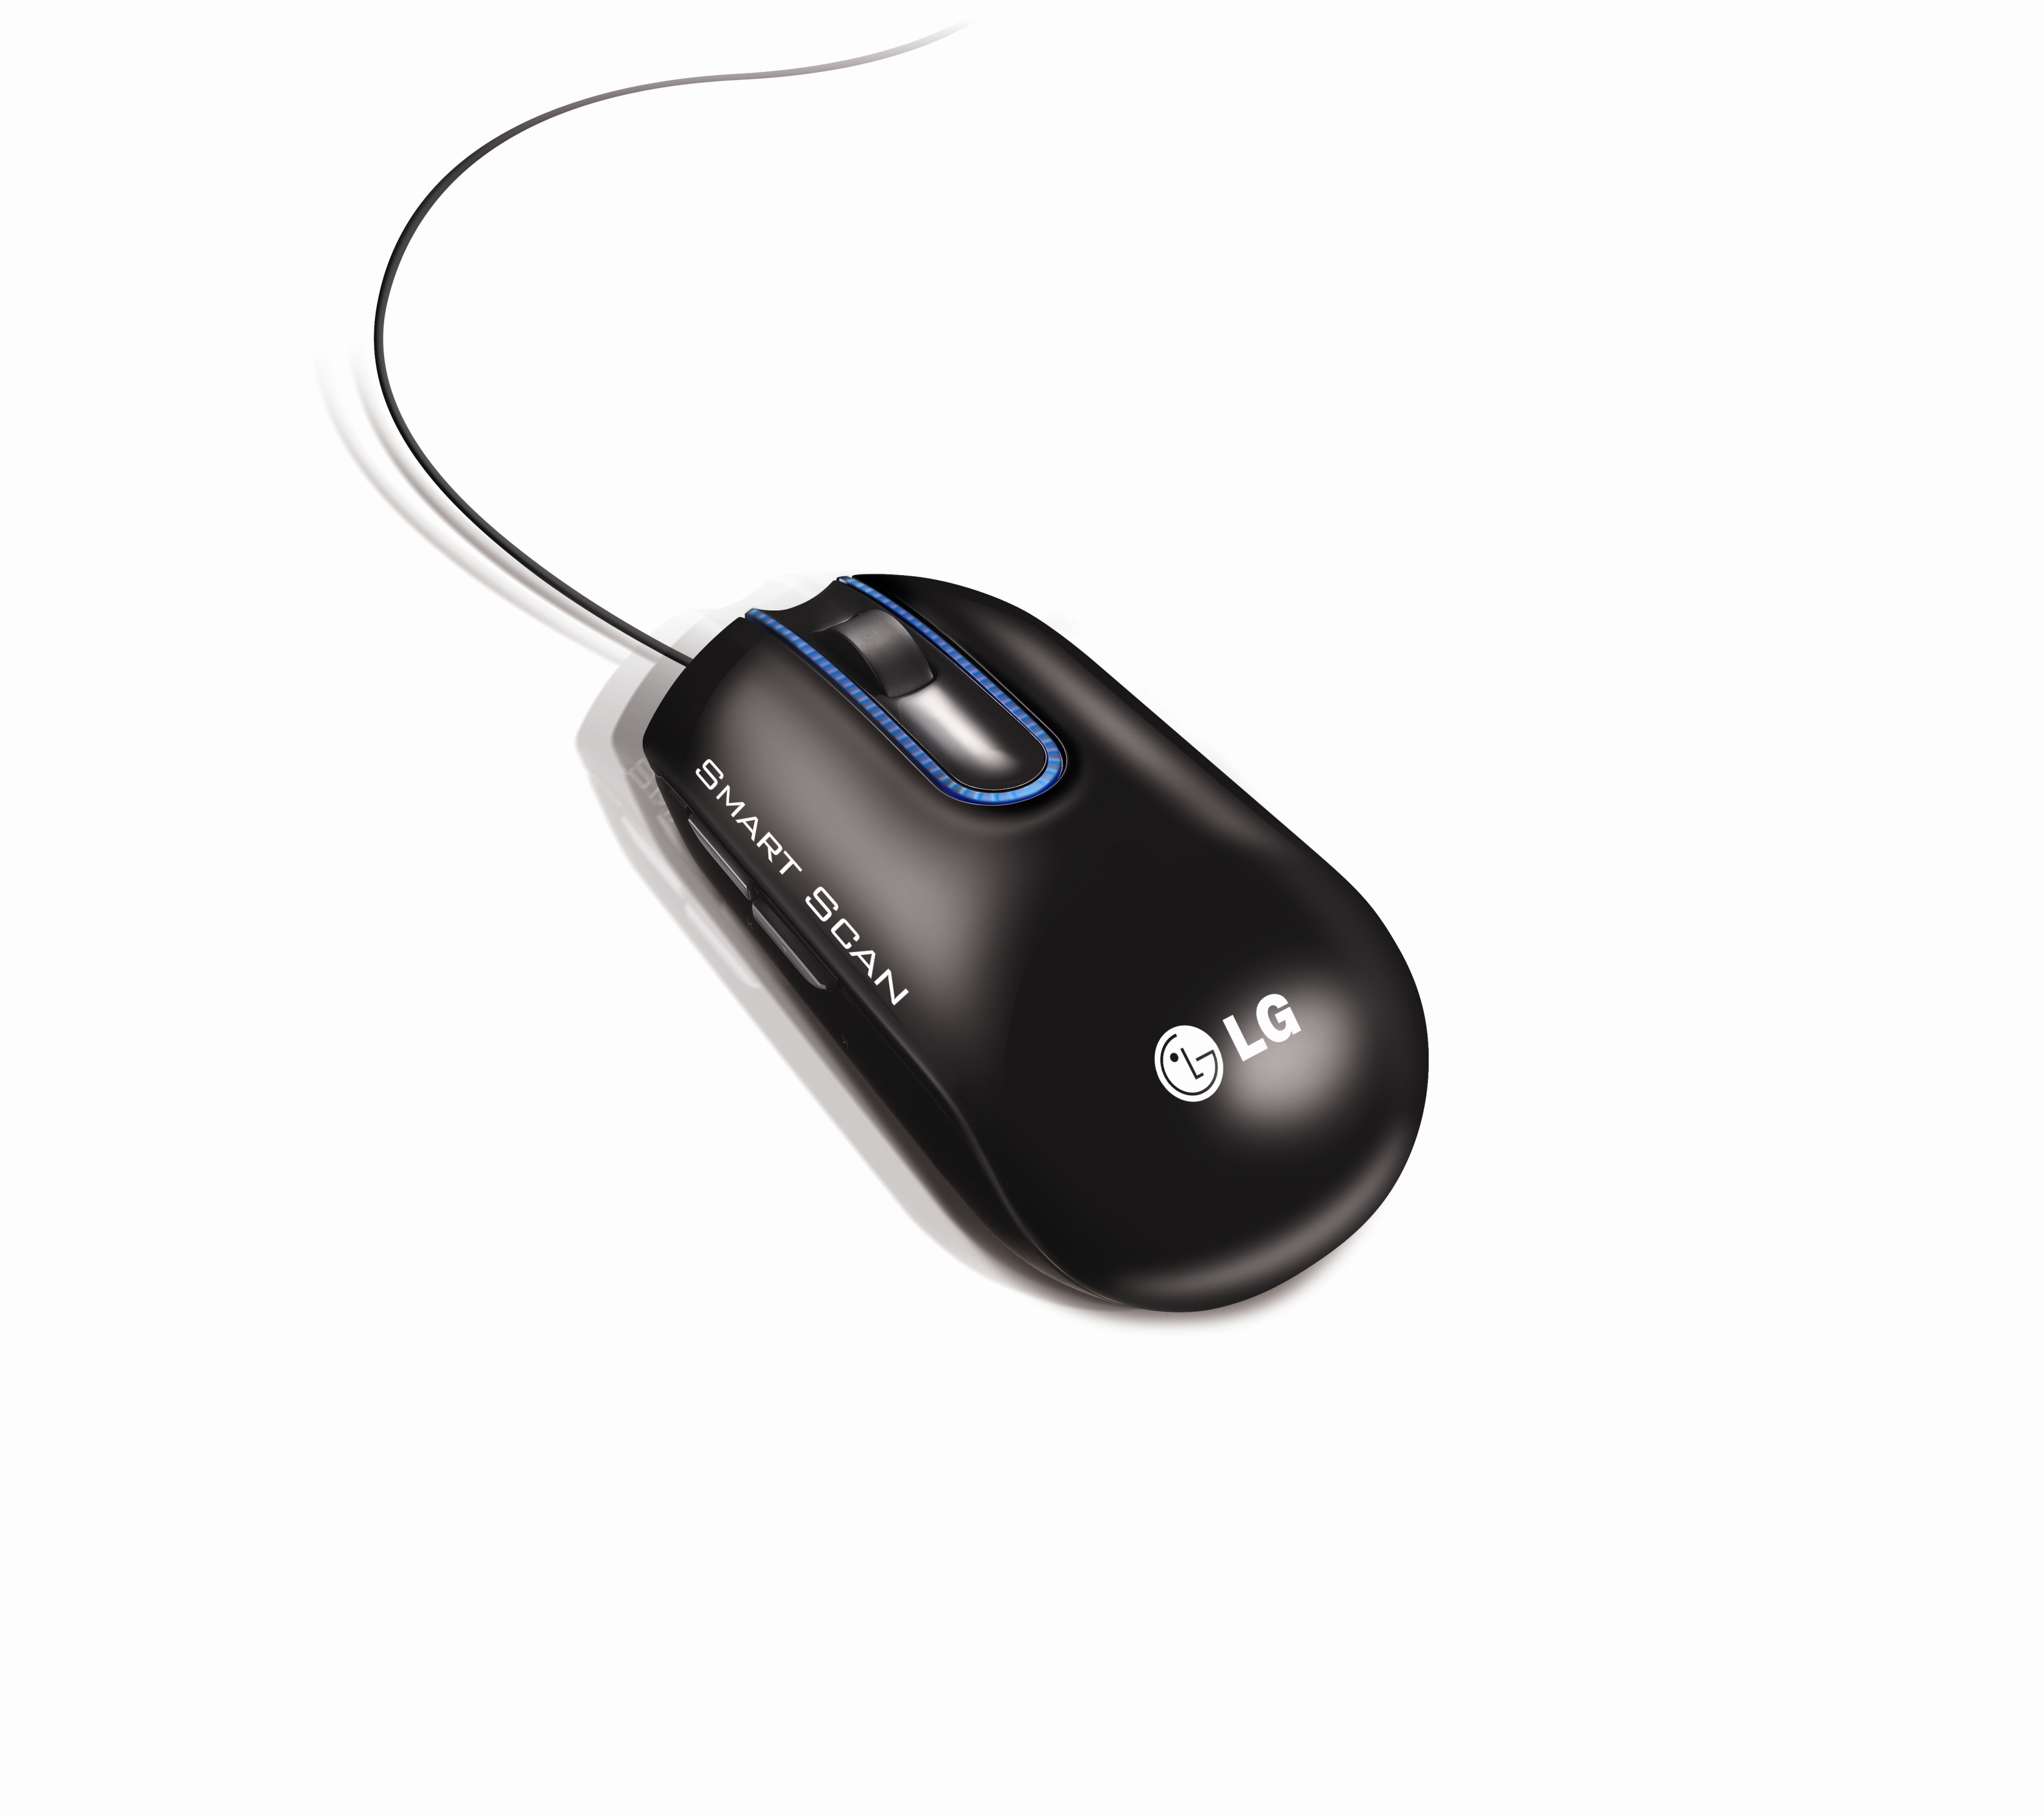 The LG mouse scanner model LSM-100